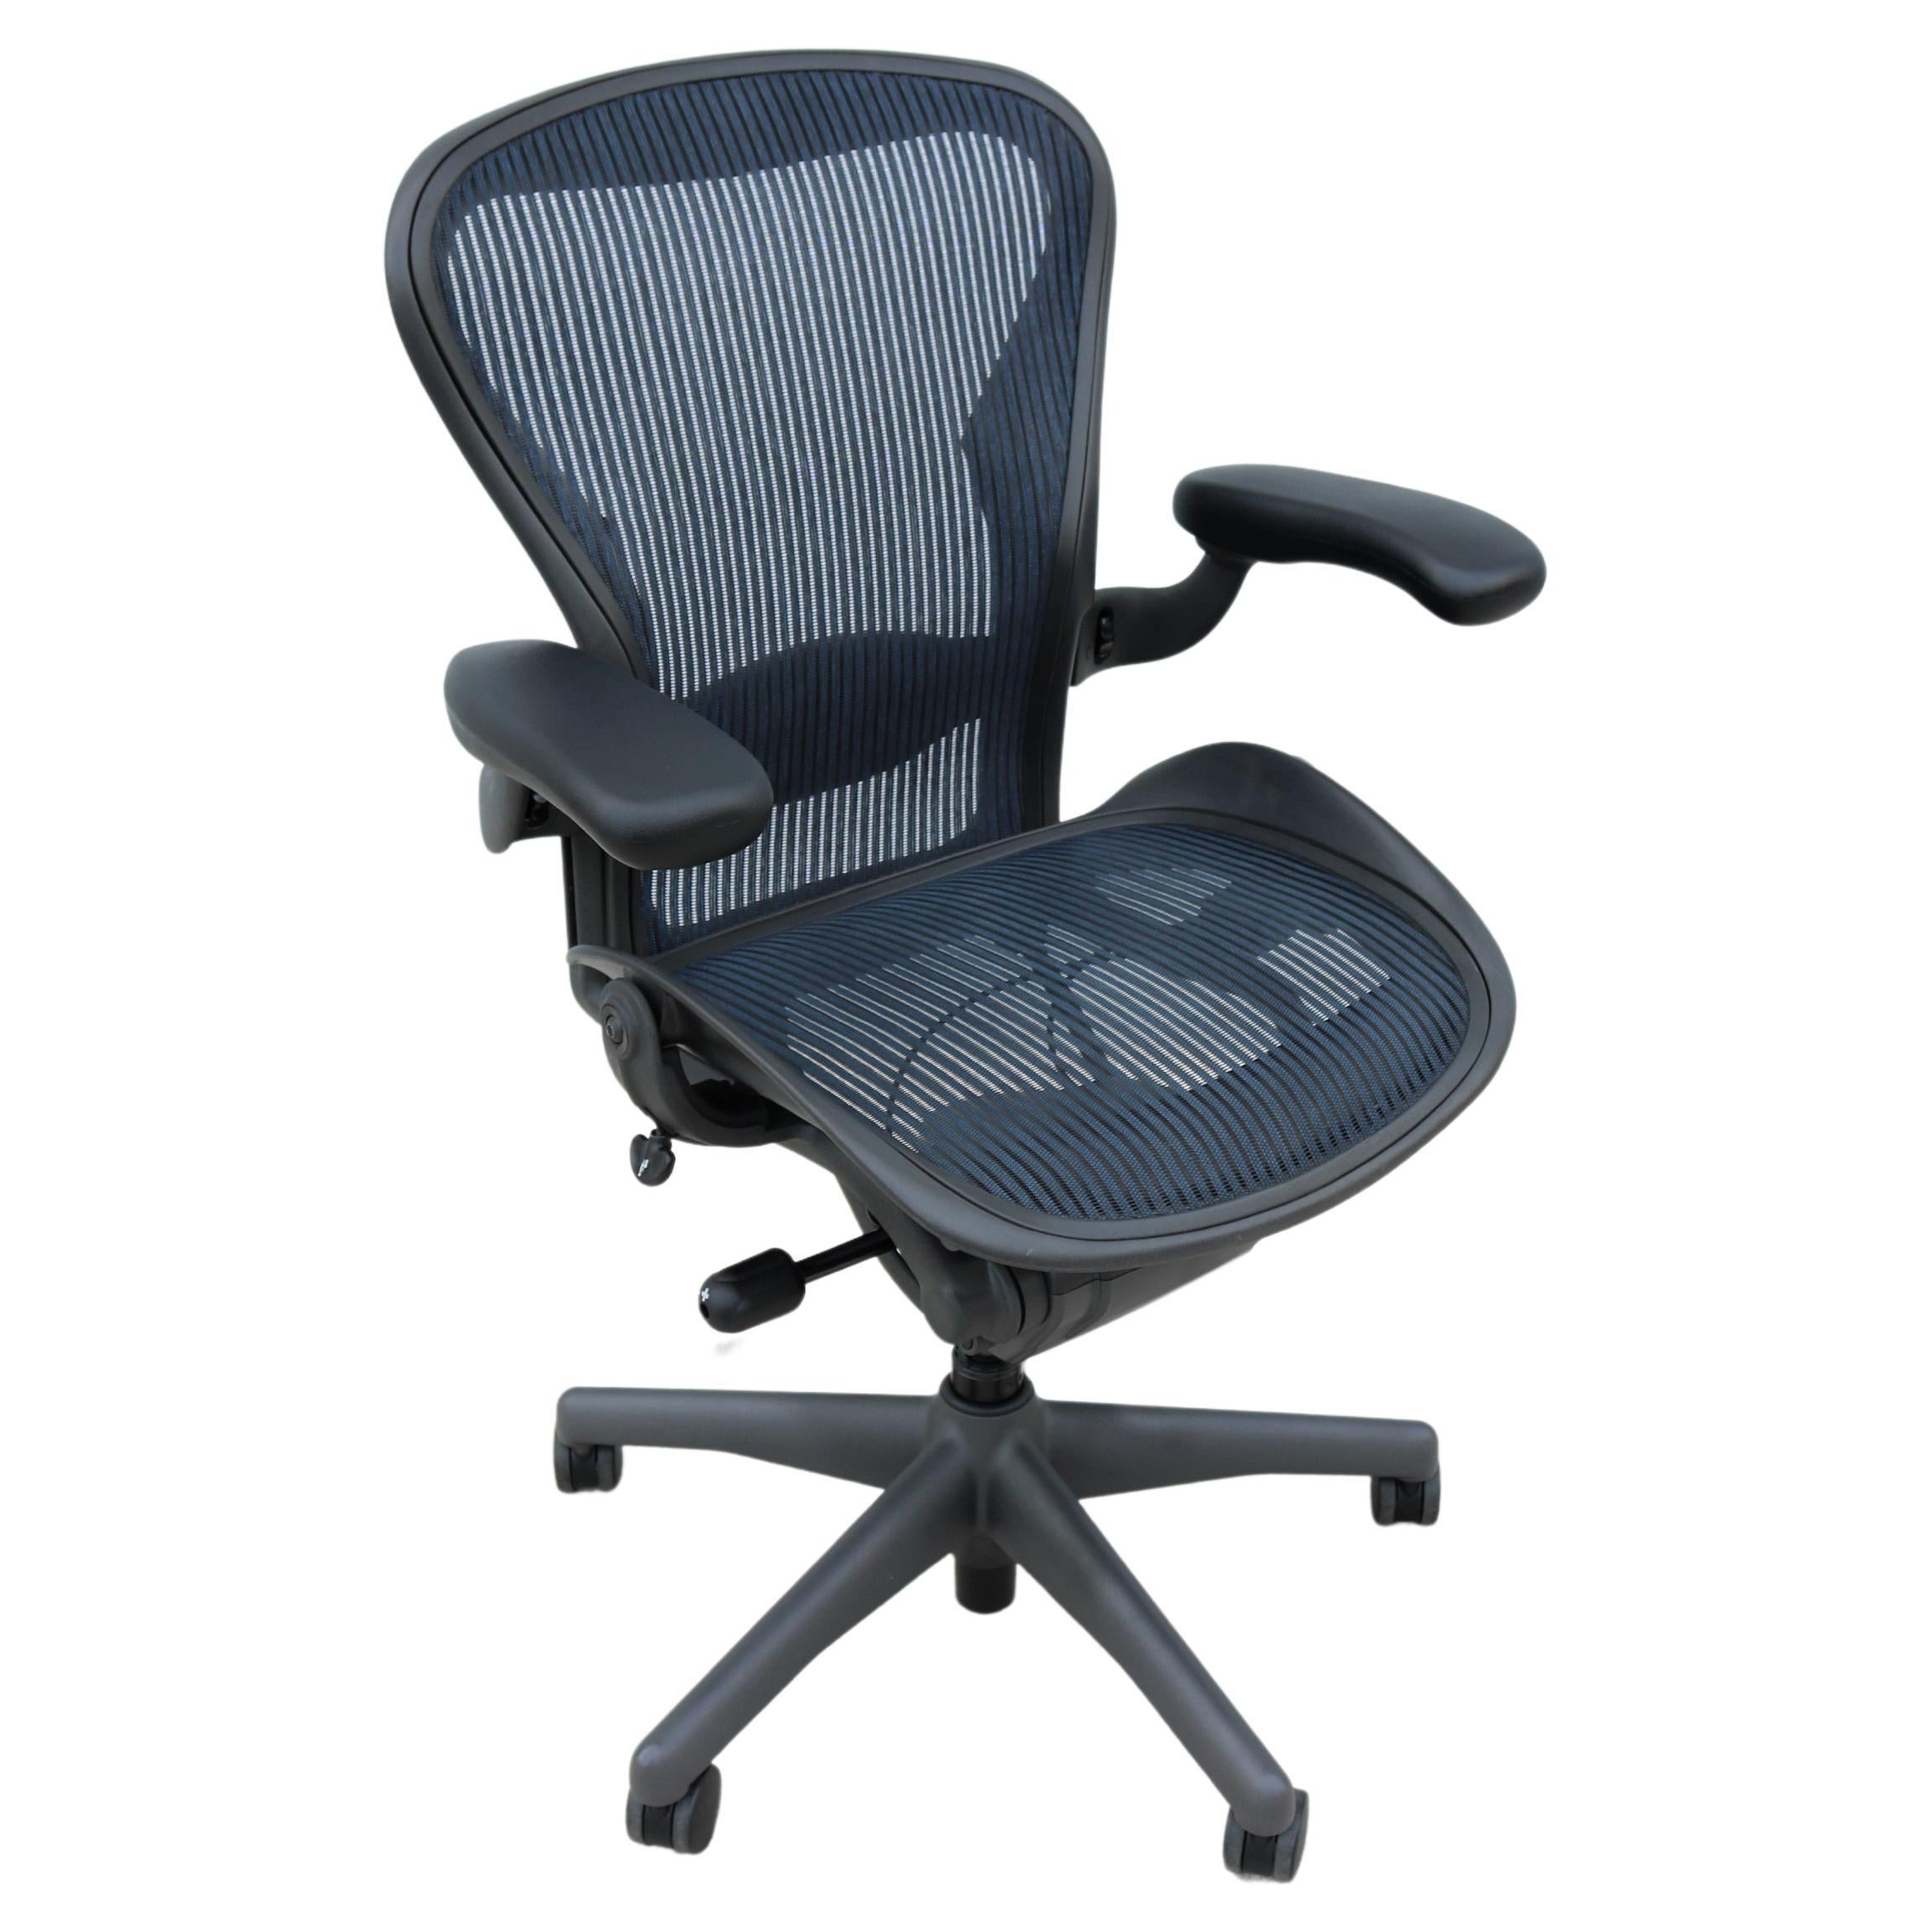 Modern Herman Miller Aeron Chair Size B in Blue Mesh Fabric Fully Adjustable